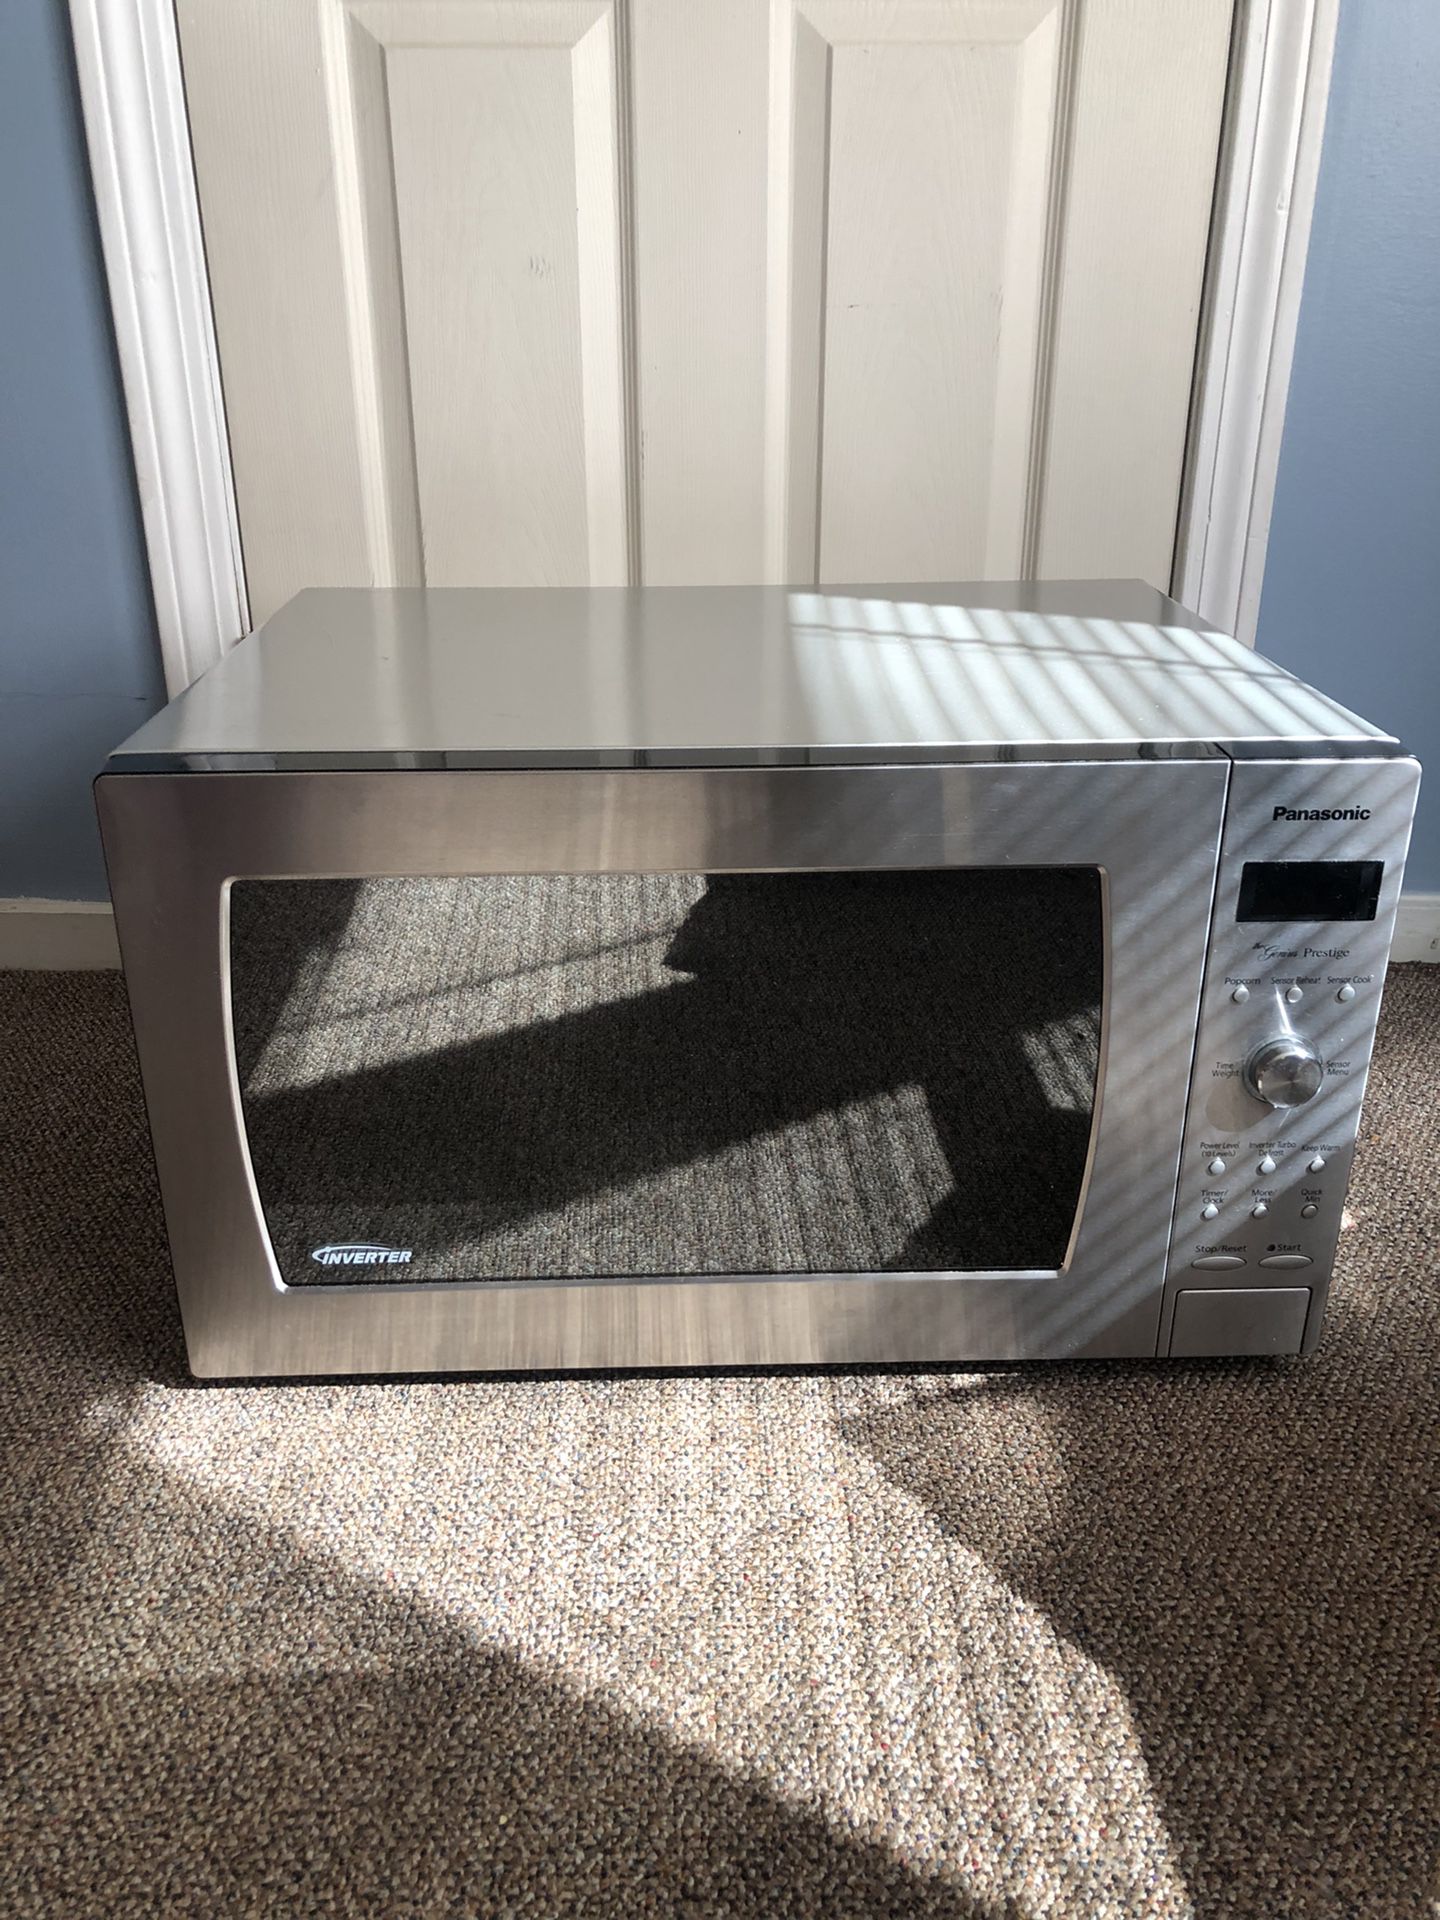 Panasonic Microwave Oven 